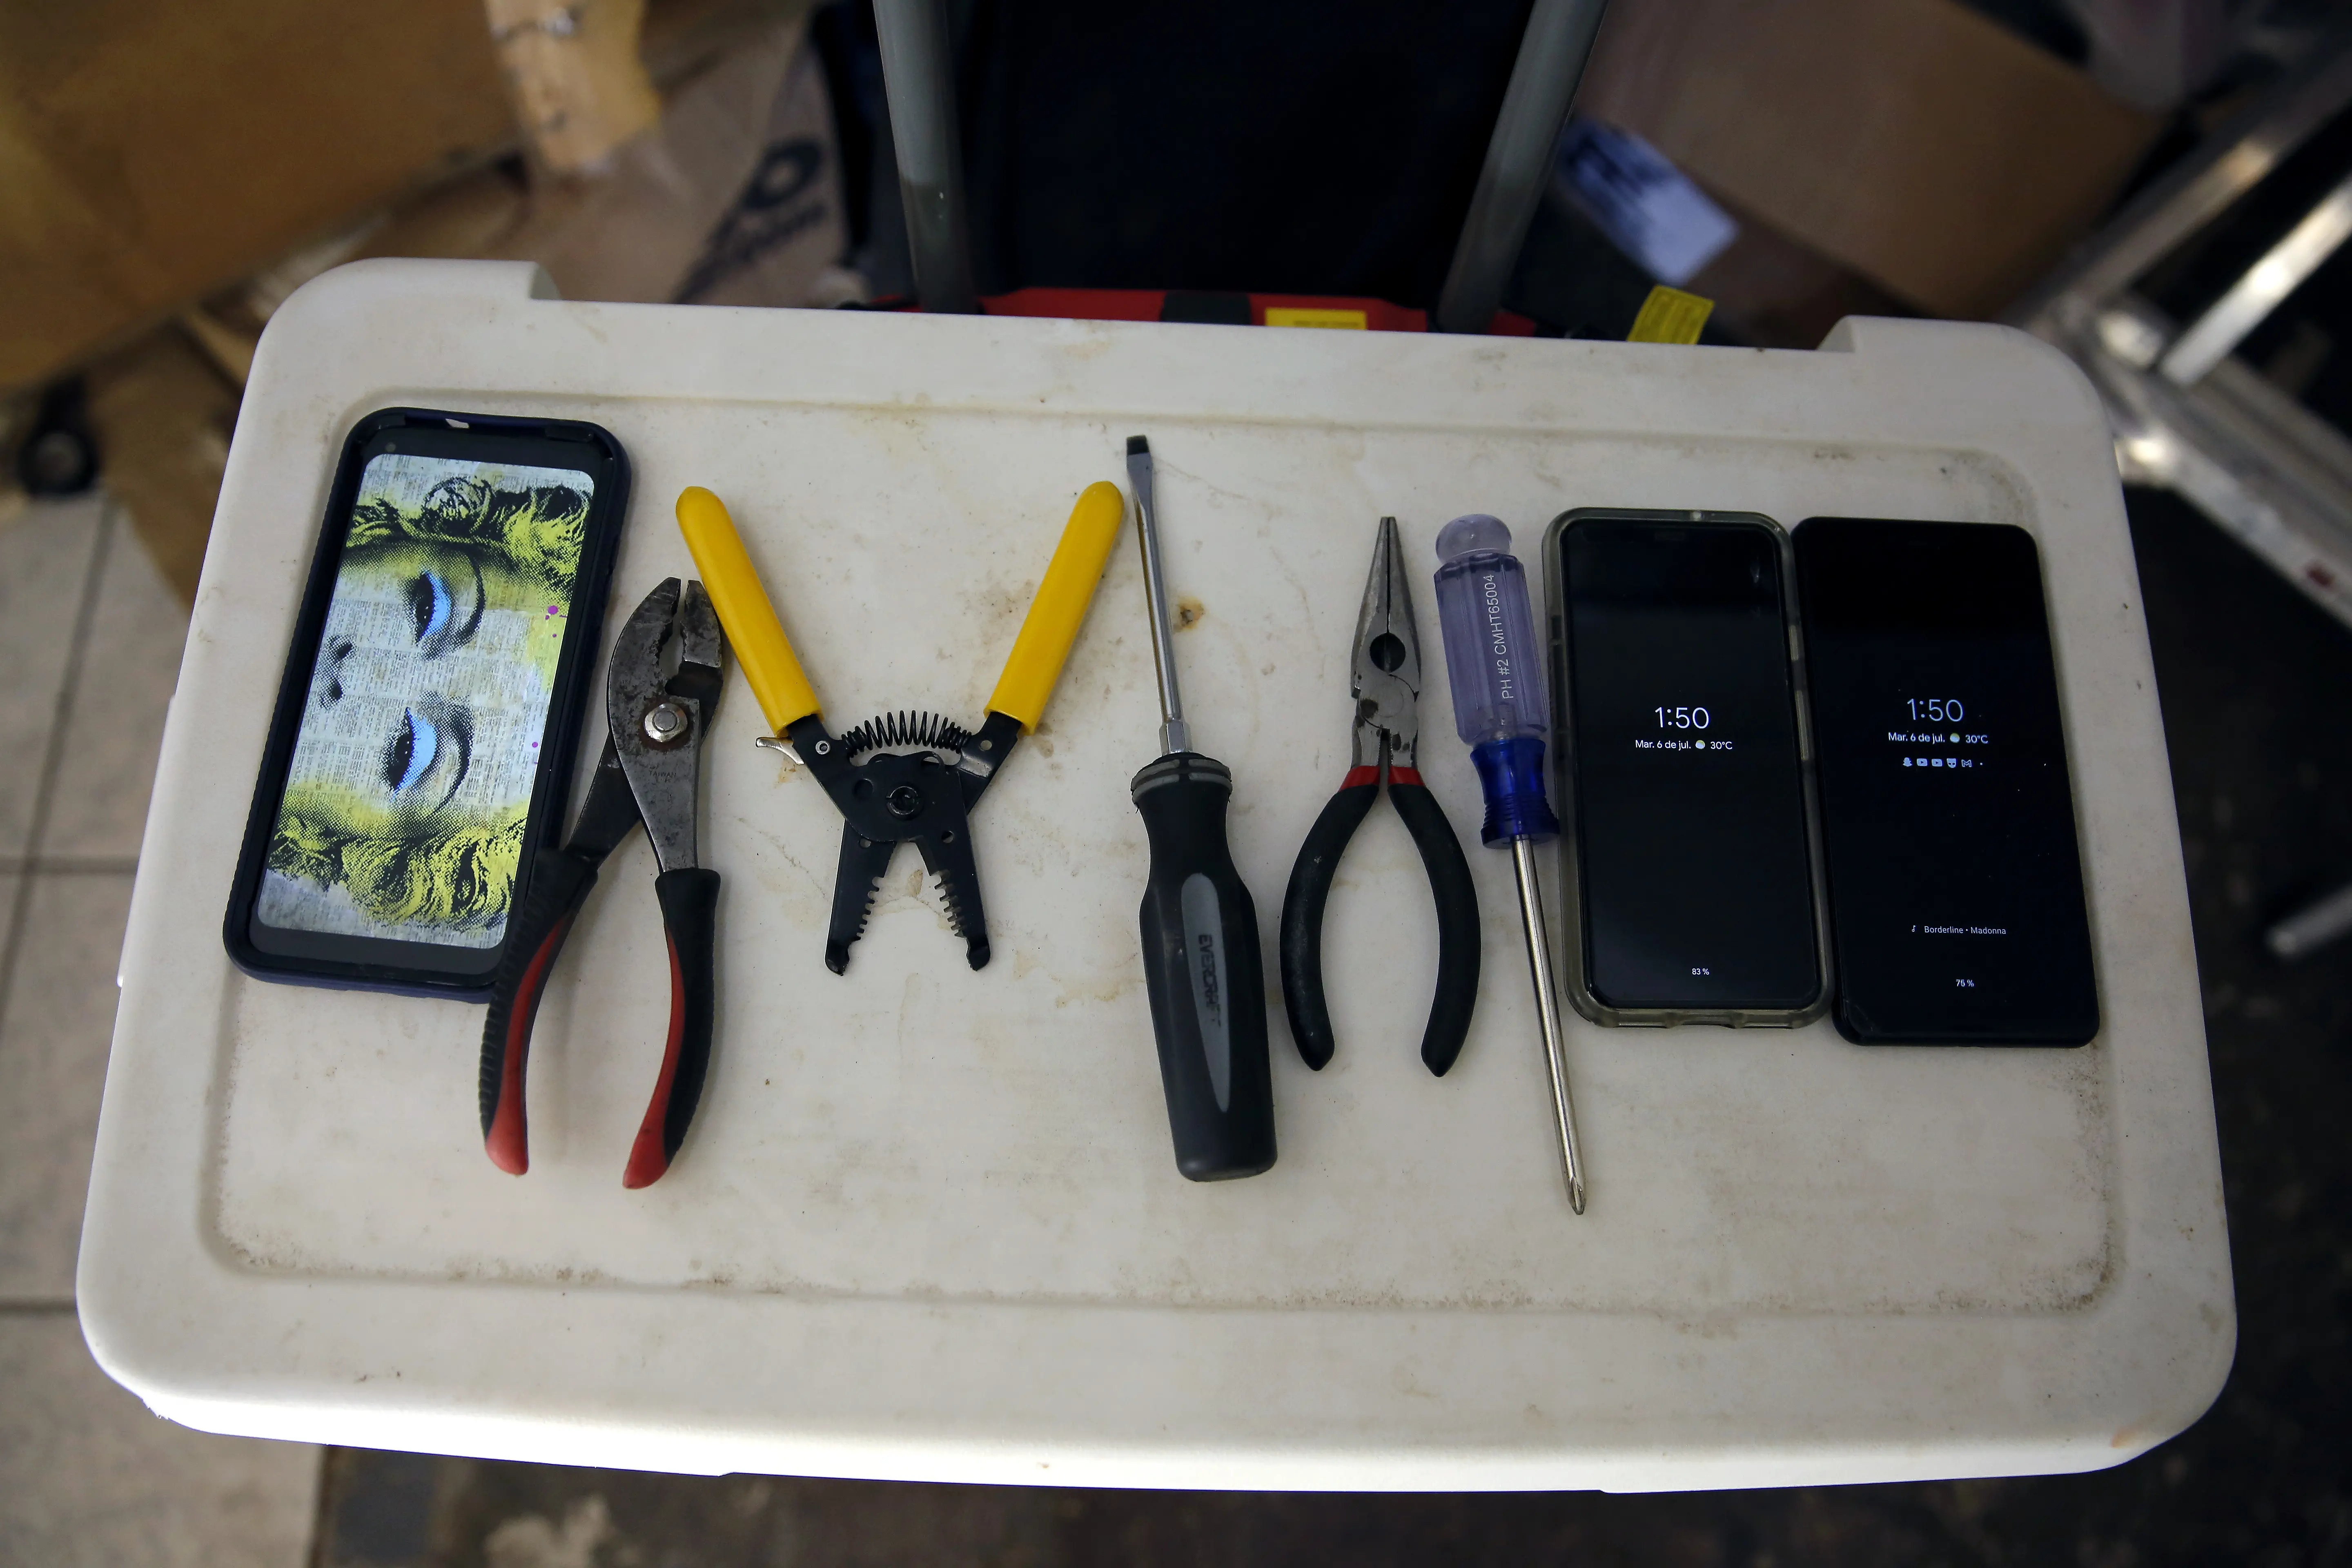 Susana's three phones and tools